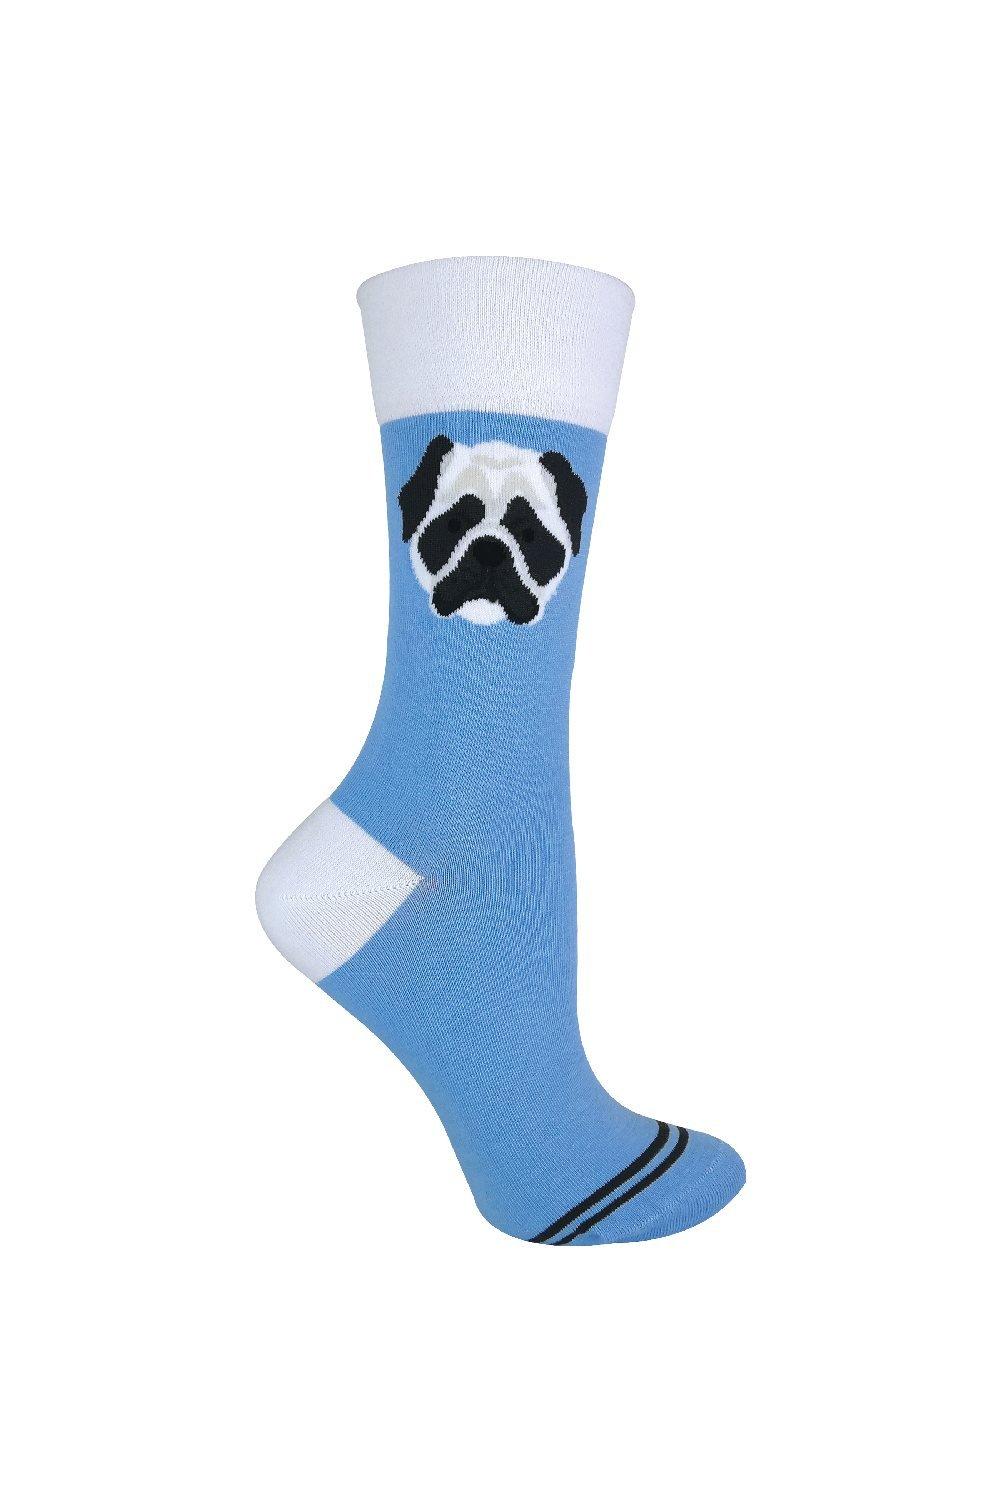 Soft Cotton Gift Novelty Dog Socks with Beagle/Pug/Scotty Dog